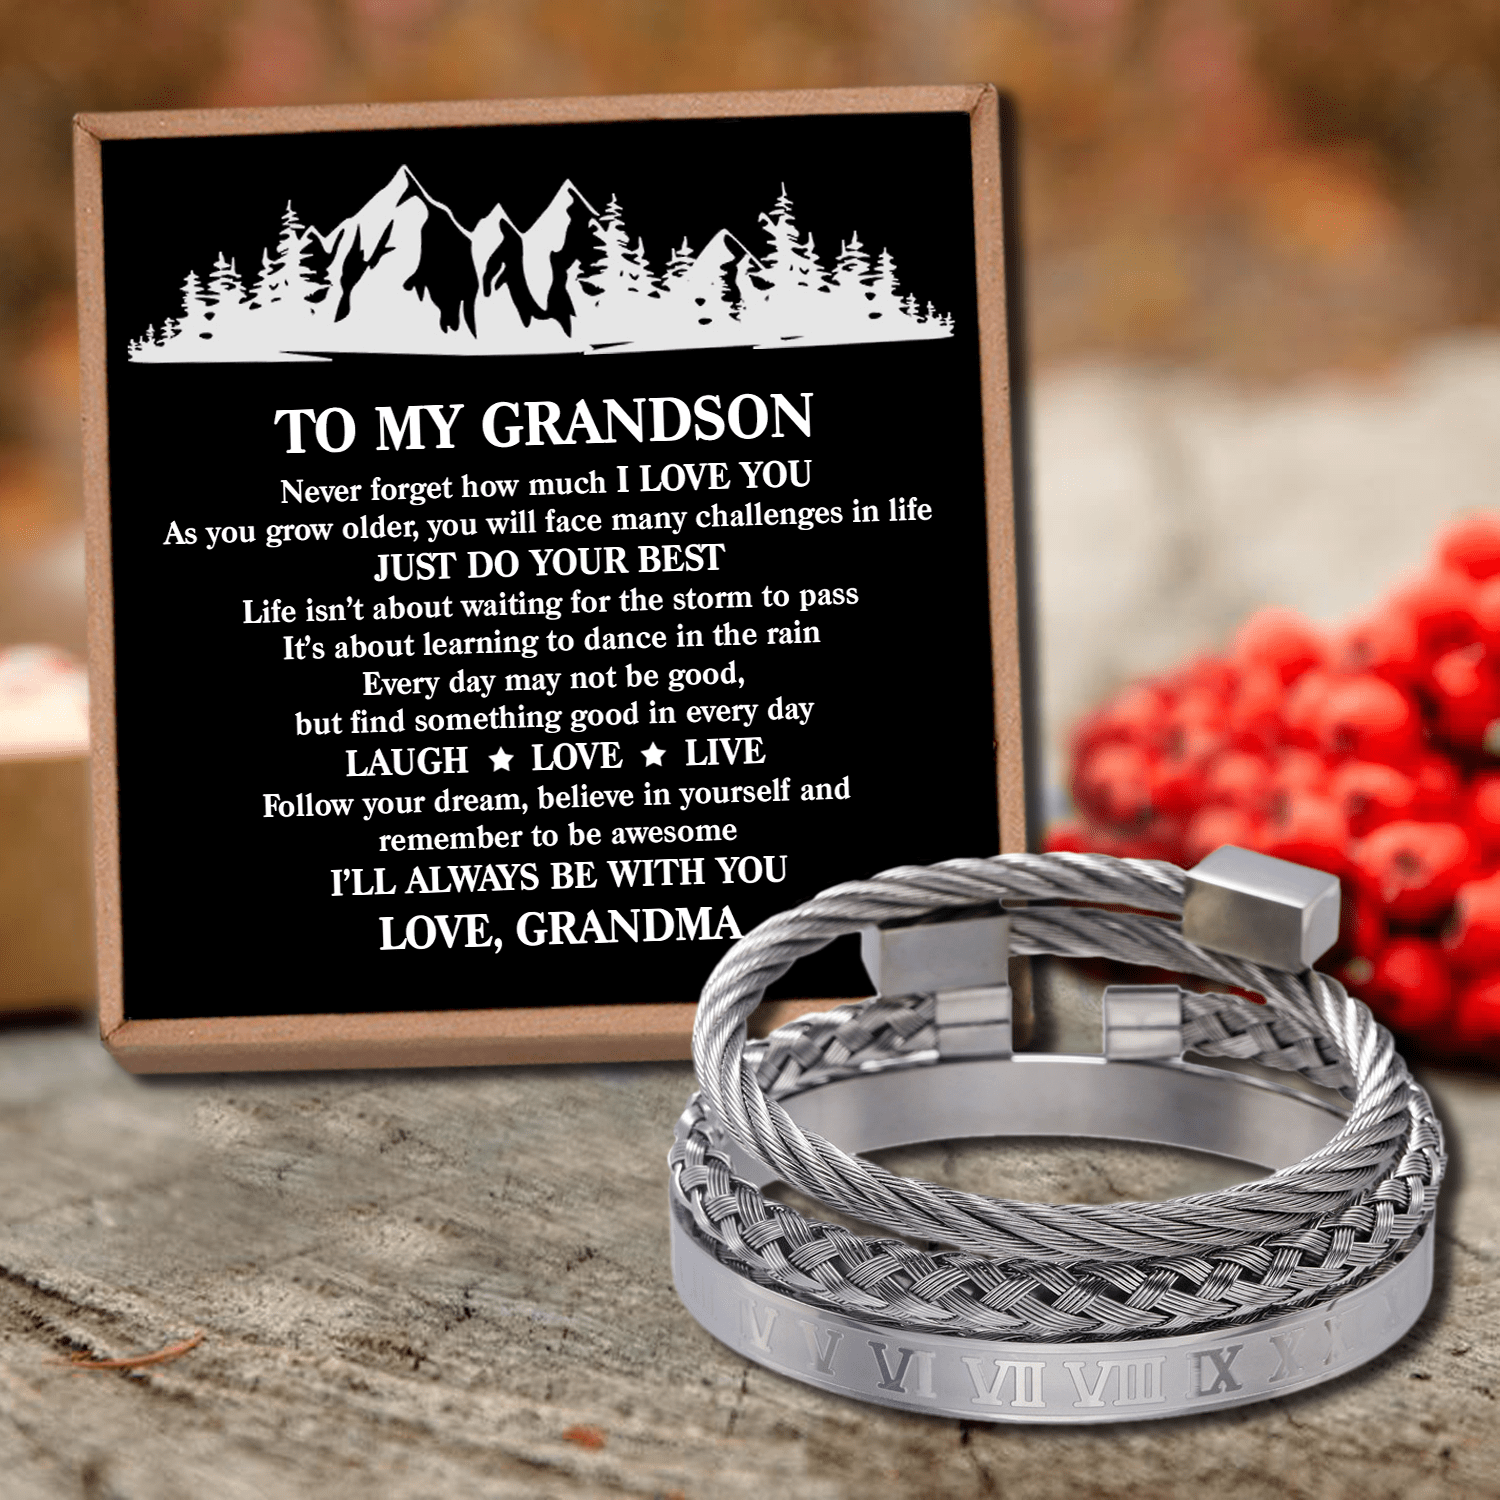 Bracelets Grandma To Grandson - Just Do Your Best Roman Numeral Bracelet Set Silver GiveMe-Gifts